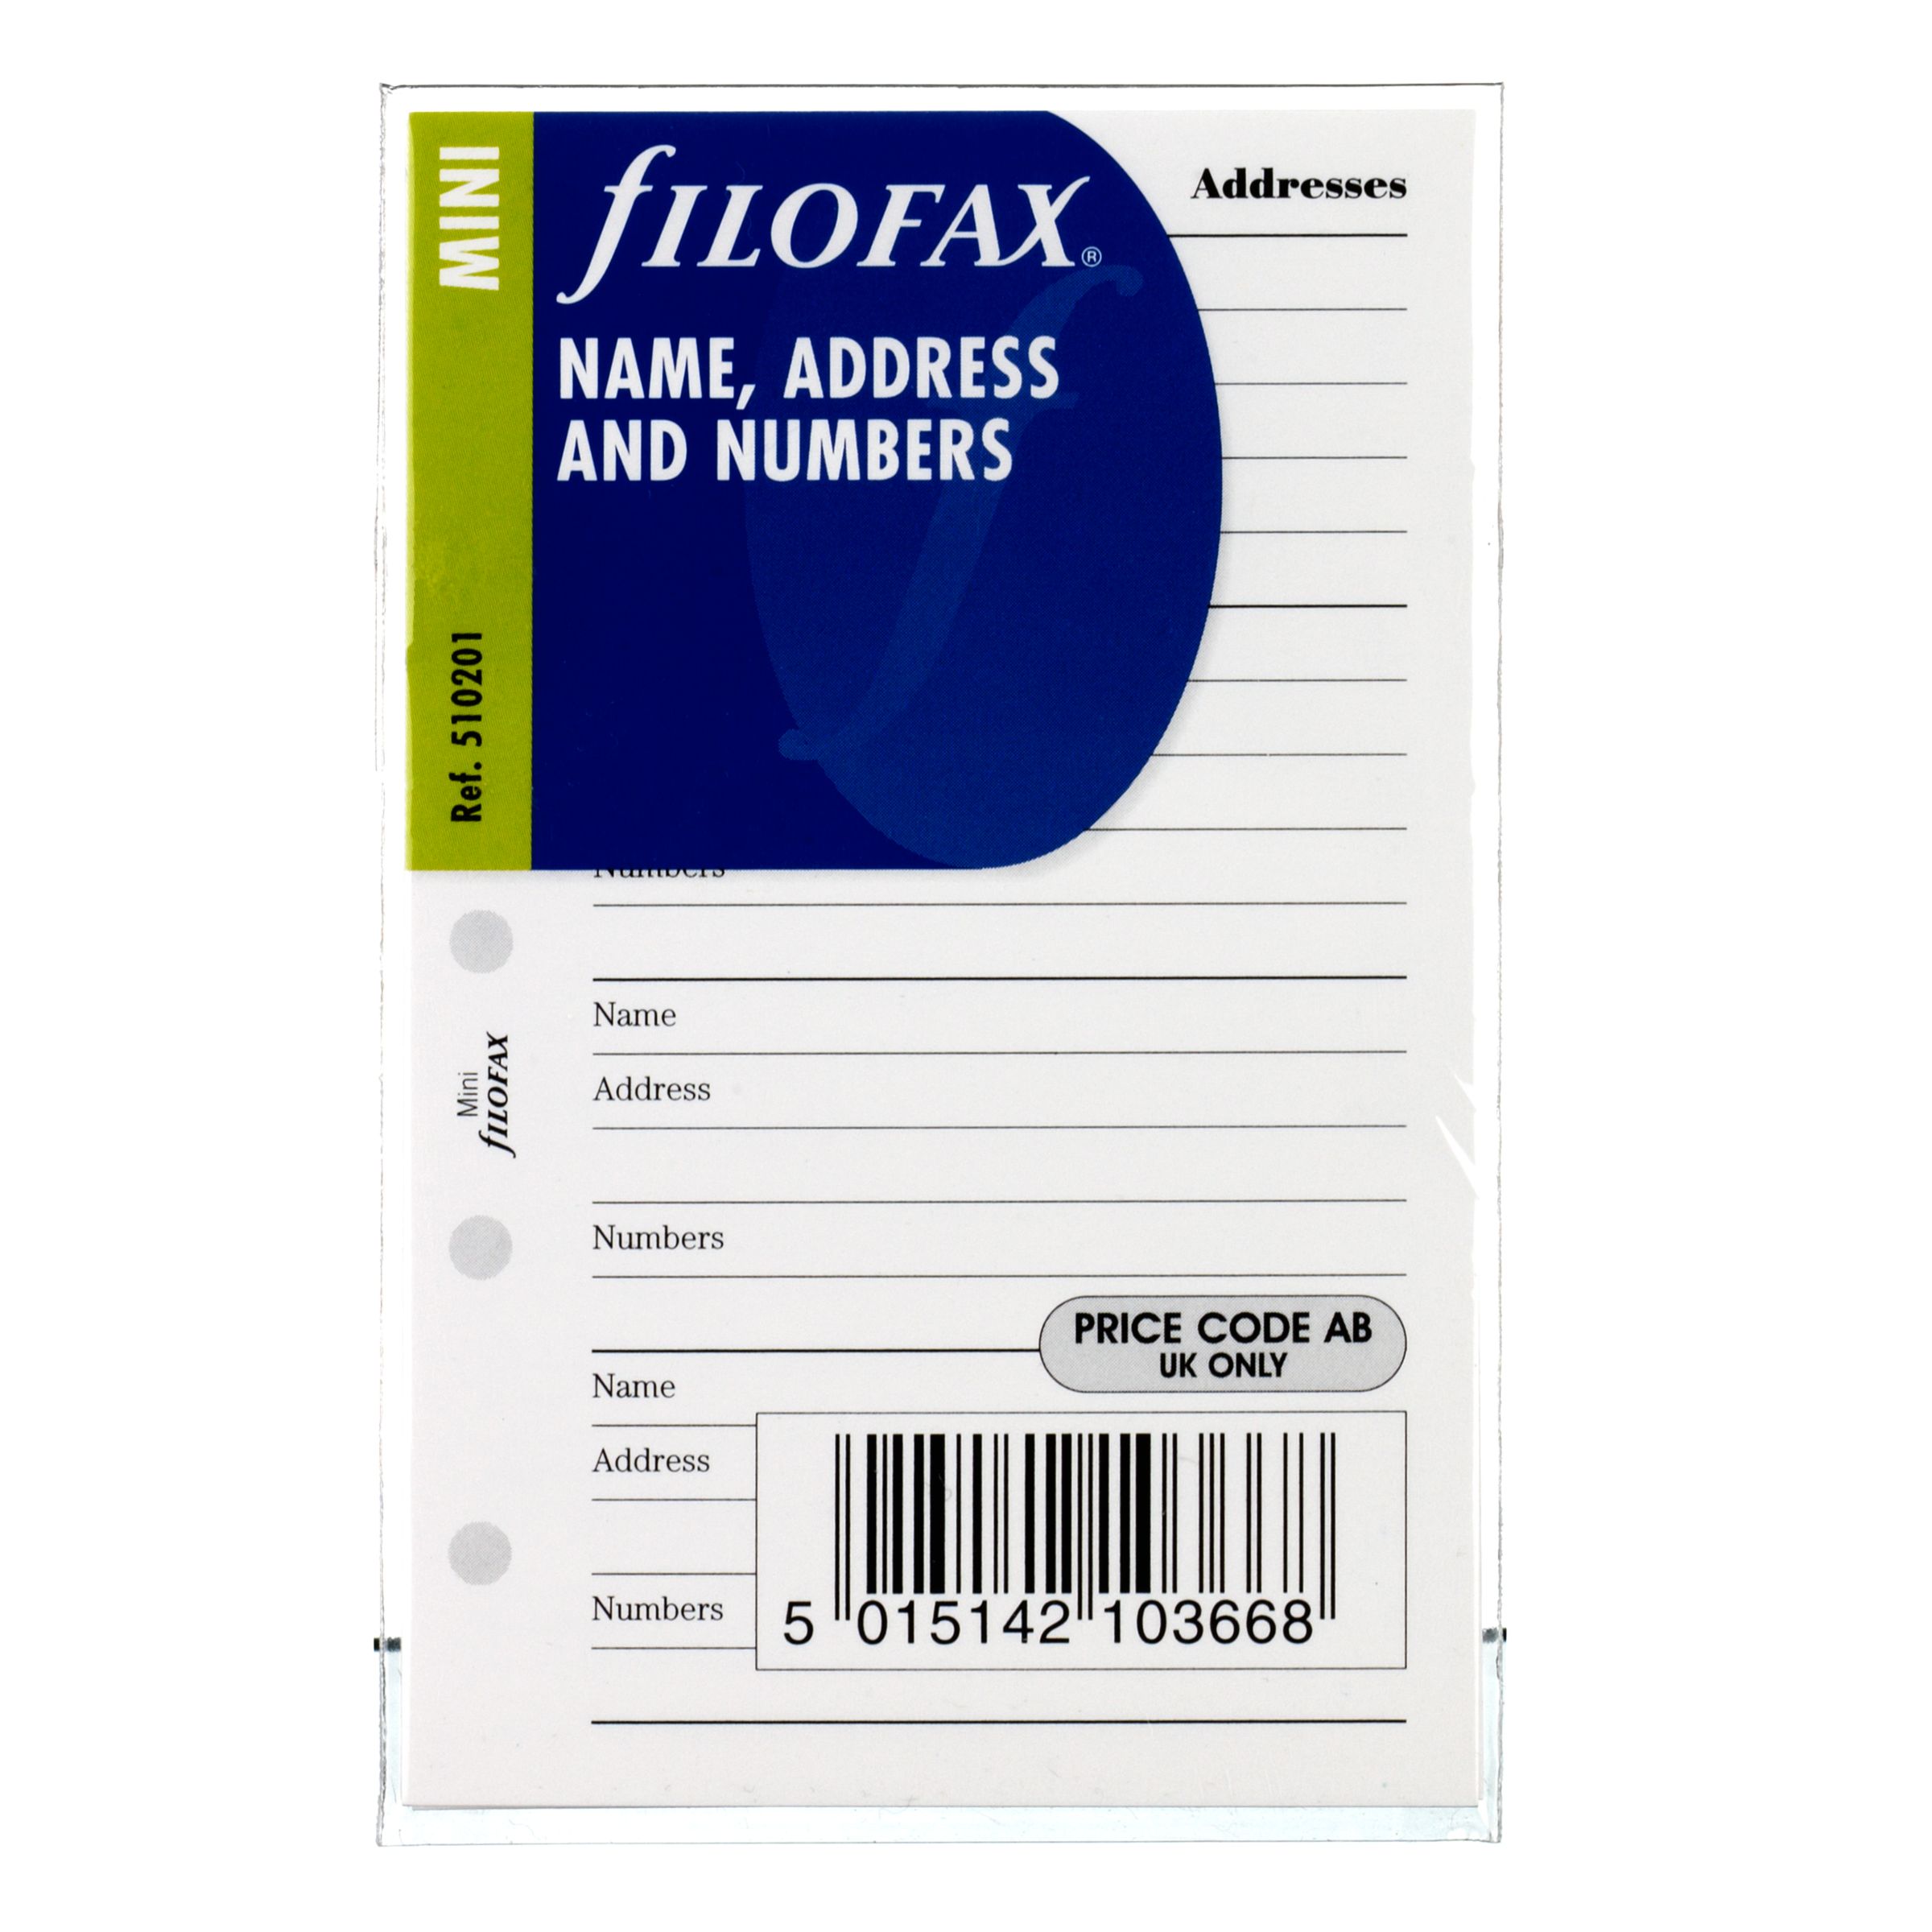 Filofax Name / Address / Numbers Headed Paper,